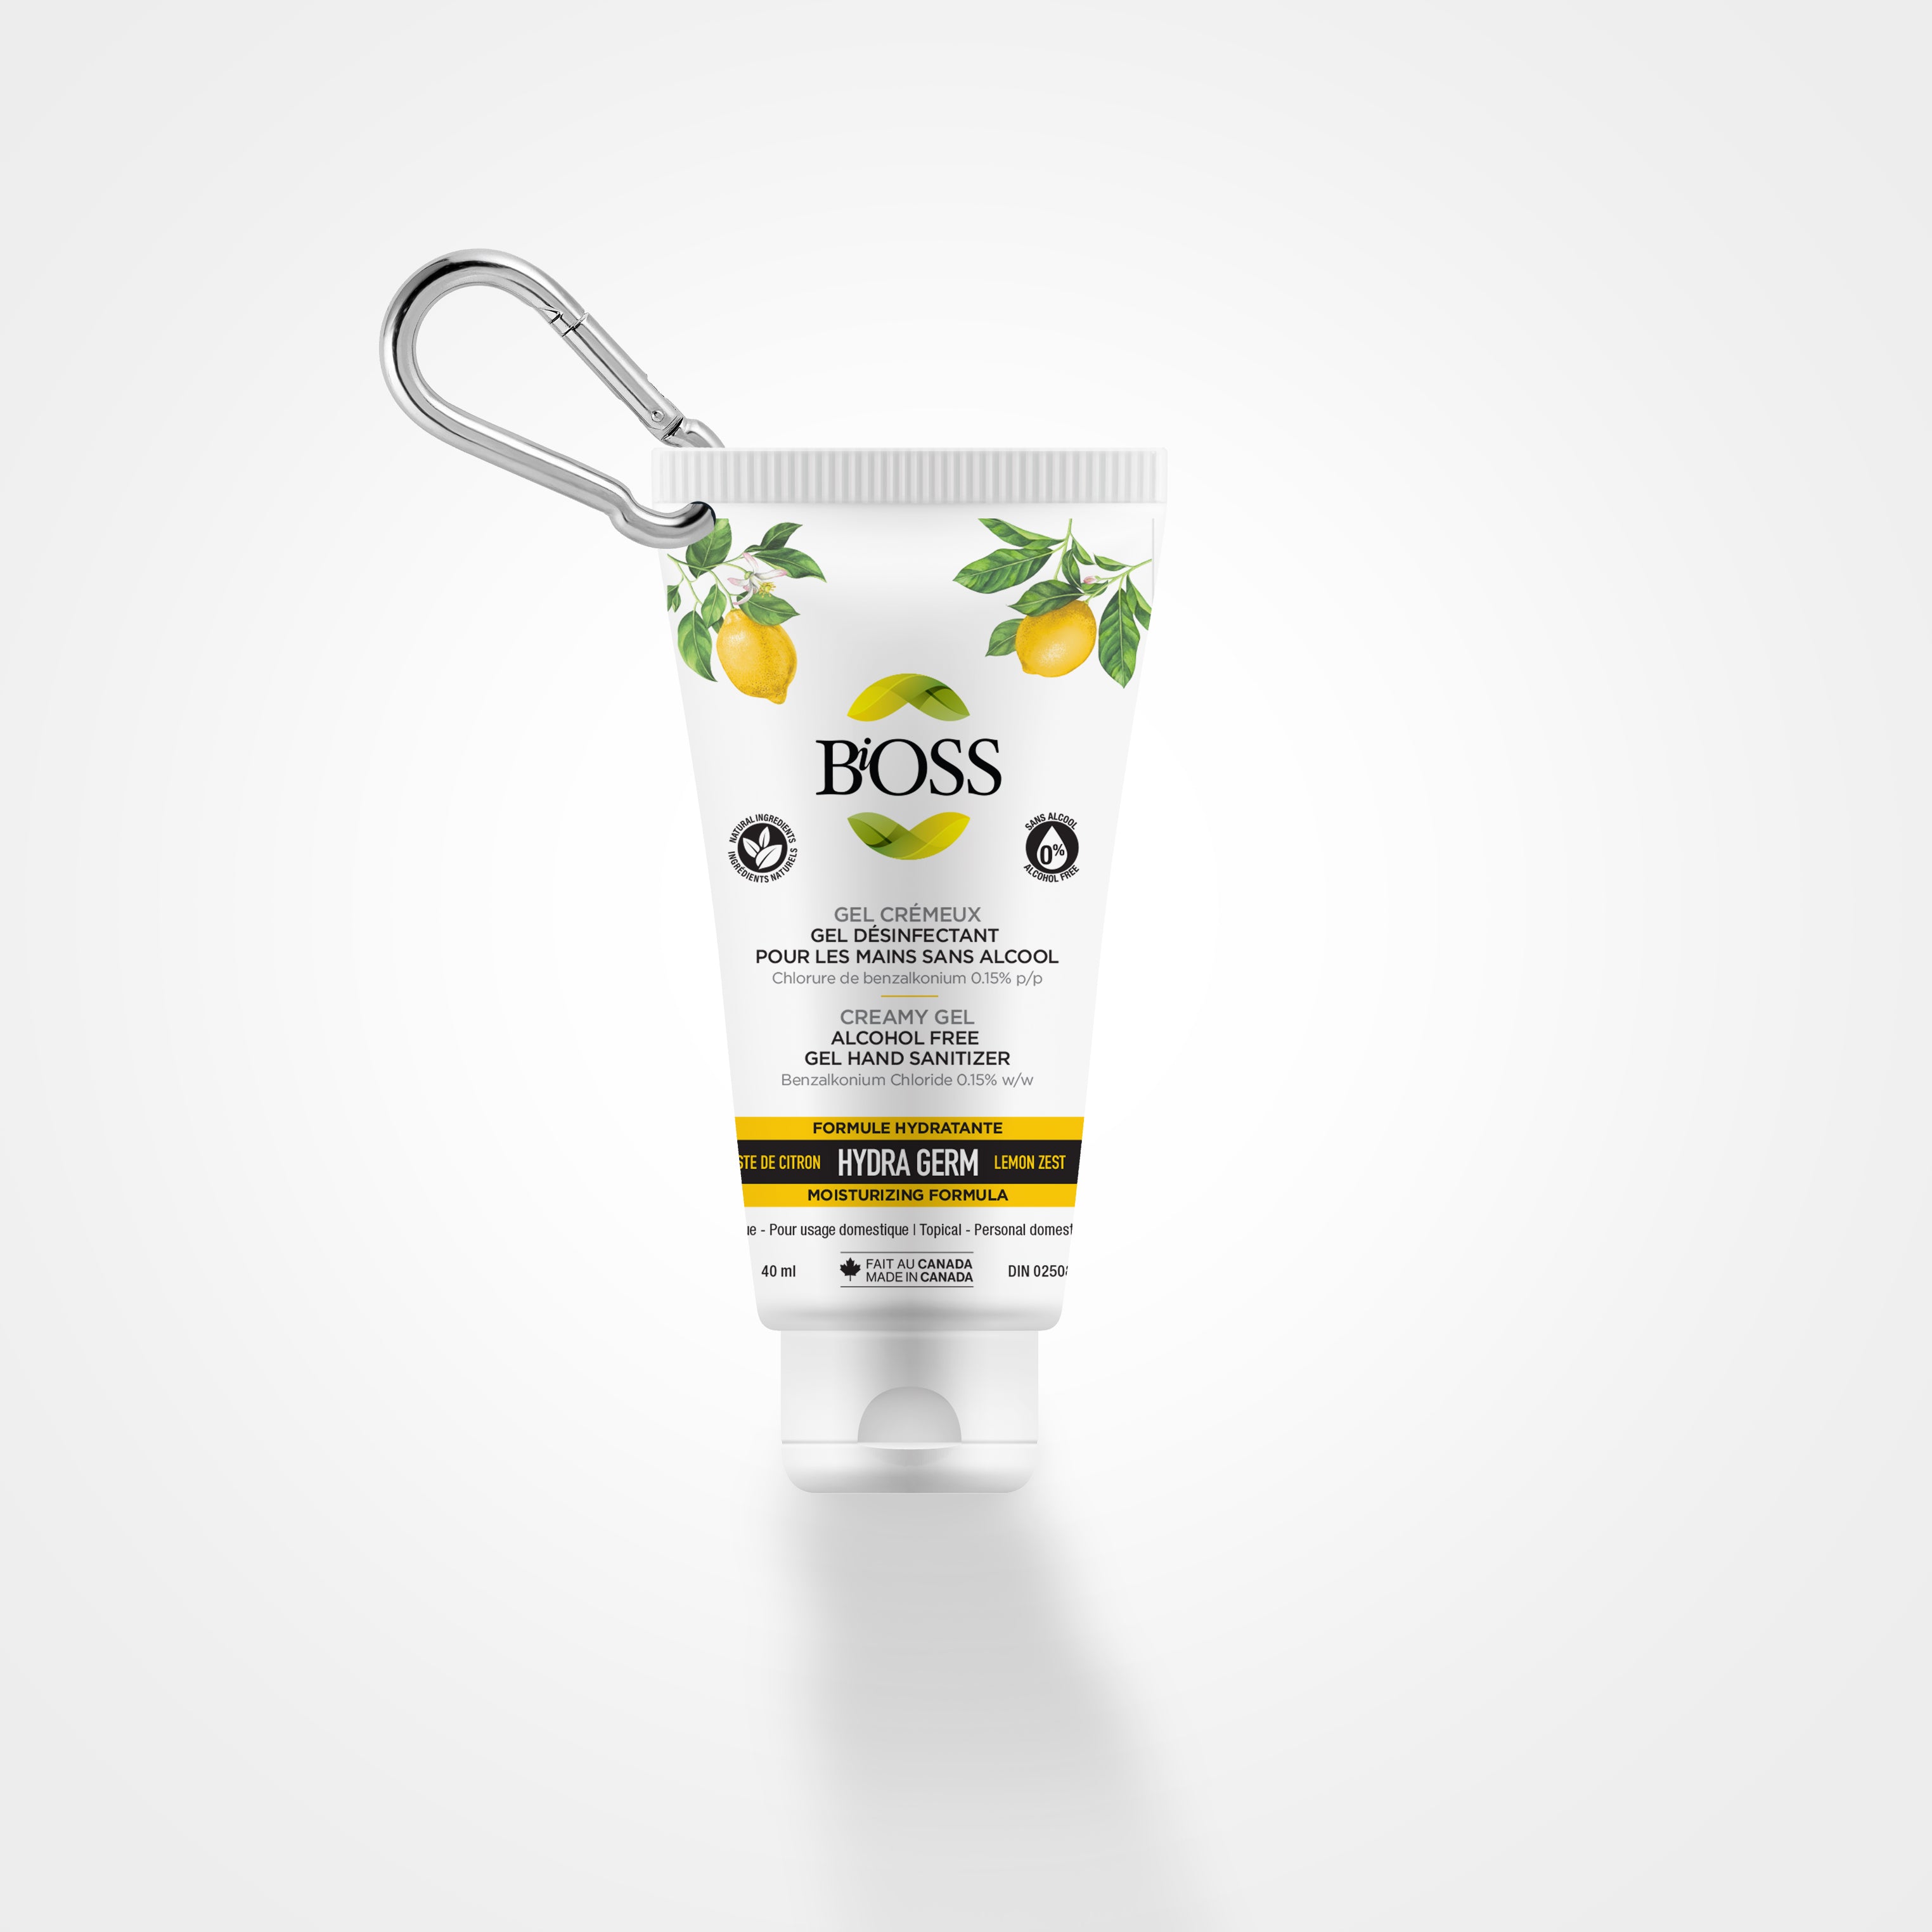 BiOSS Hydra Germ 40ml - Lemon essence